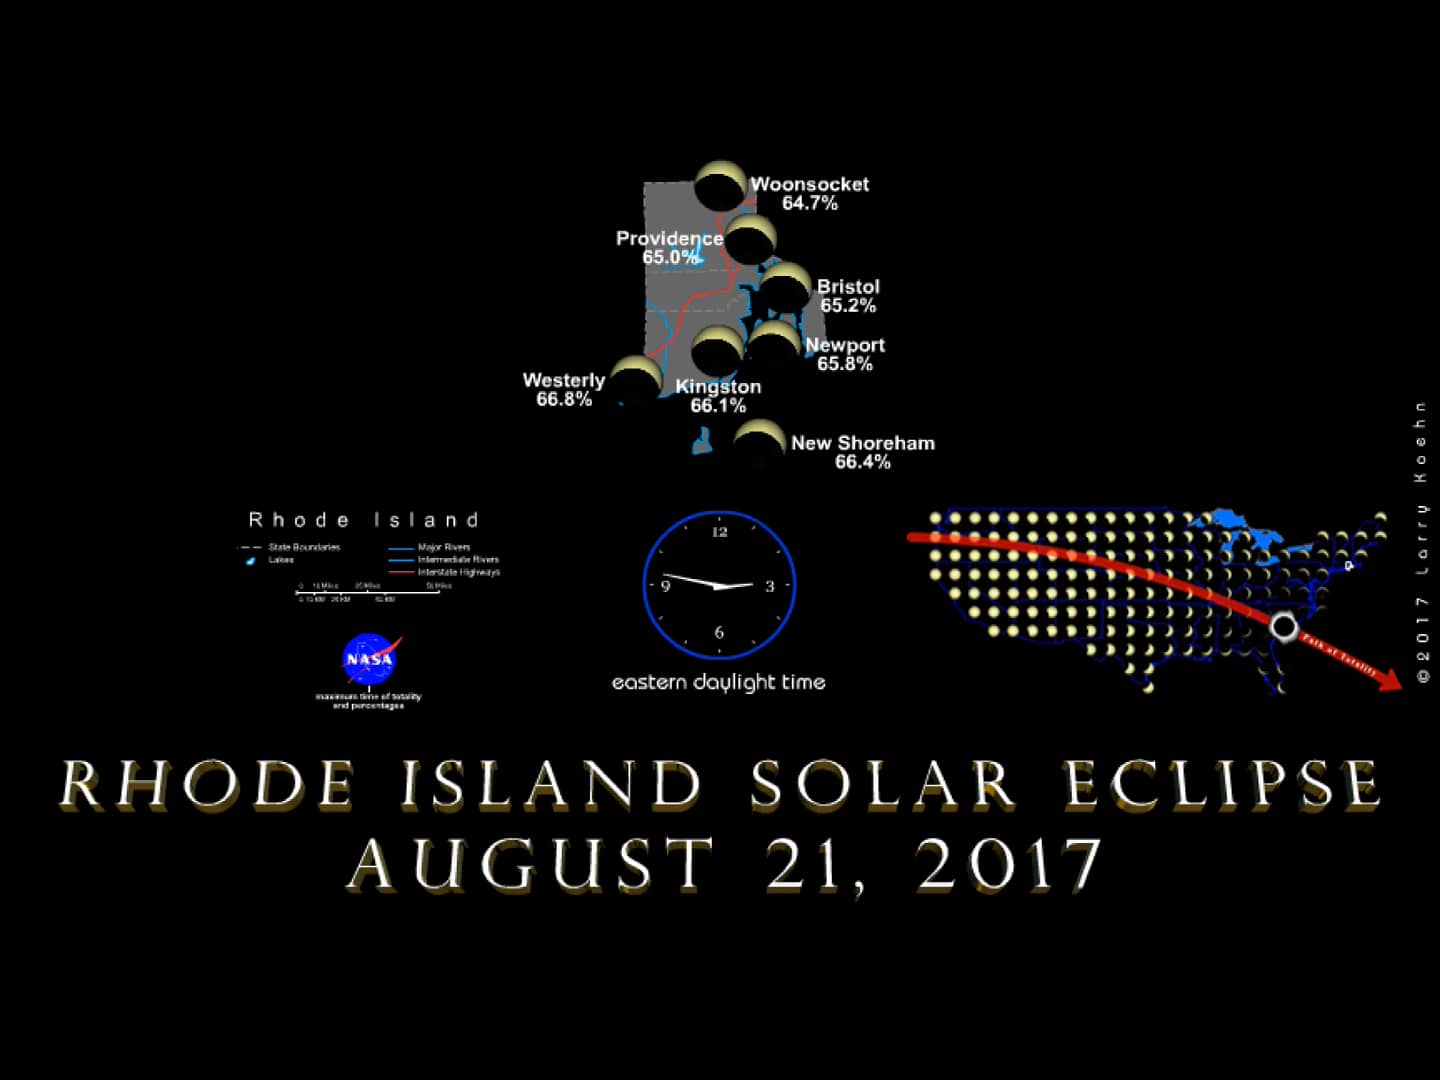 rhode-island-solar-eclipse-on-august-21-2017-on-vimeo